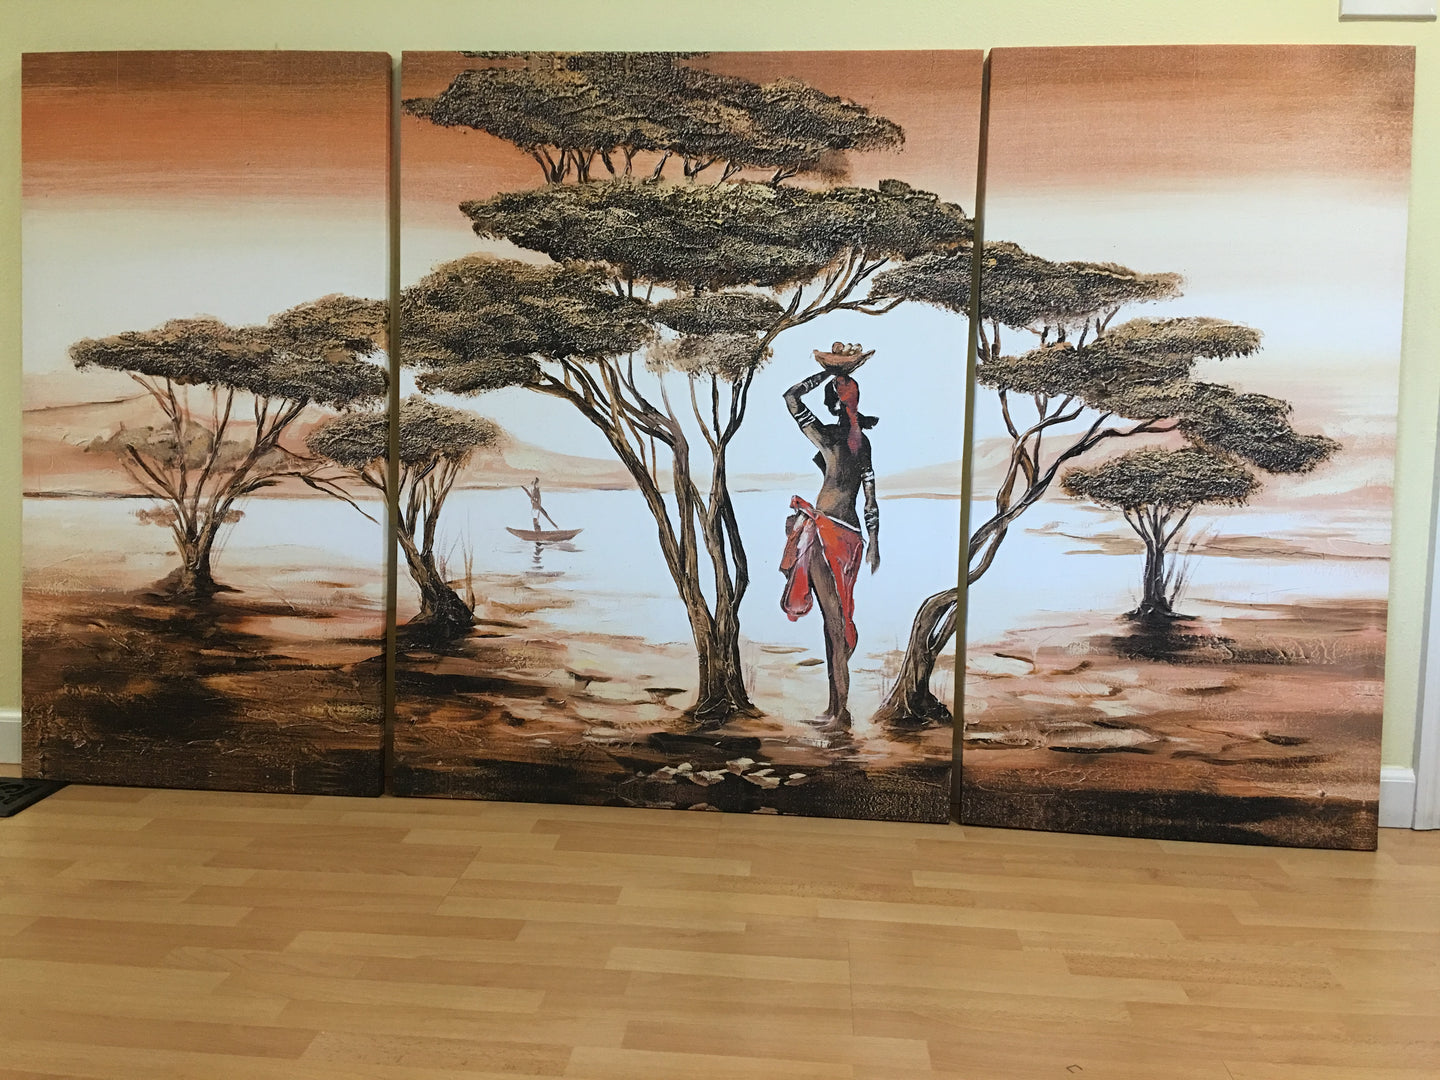 'Woman Near Lake' Giant Canvas Print wall Decor Painting